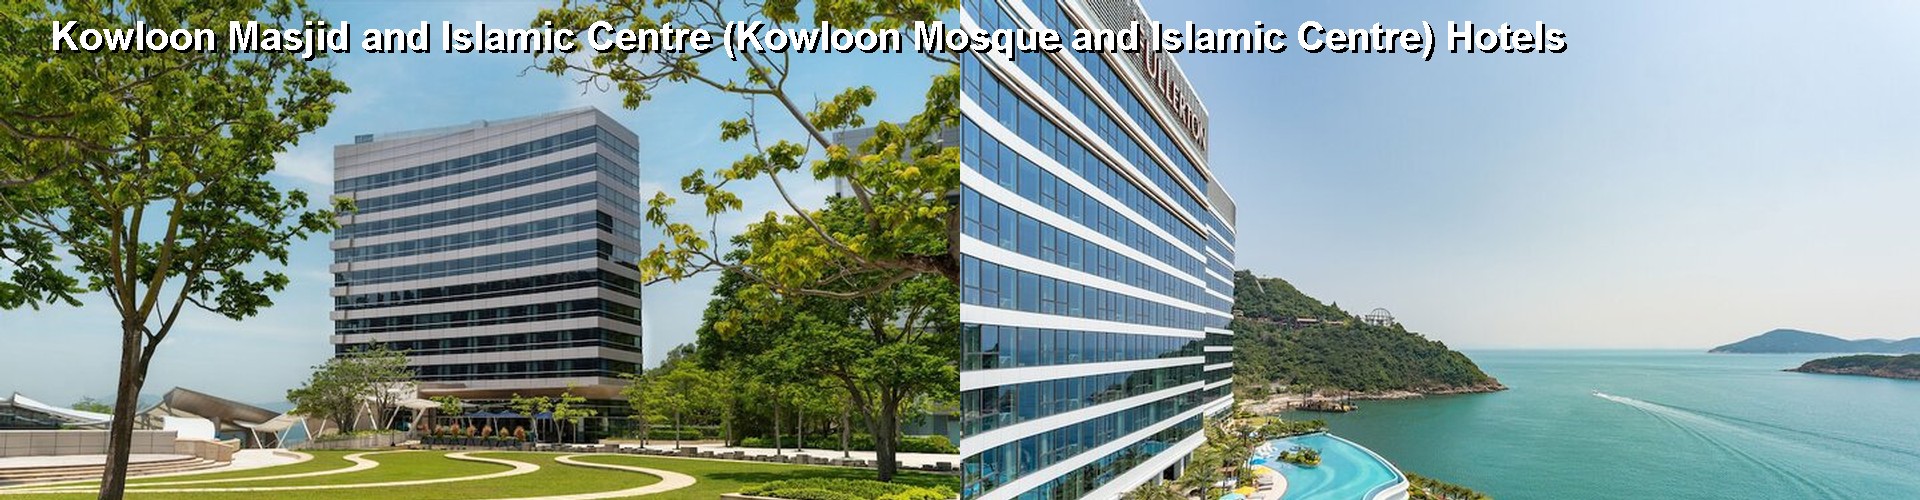 5 Best Hotels near Kowloon Masjid and Islamic Centre (Kowloon Mosque and Islamic Centre)